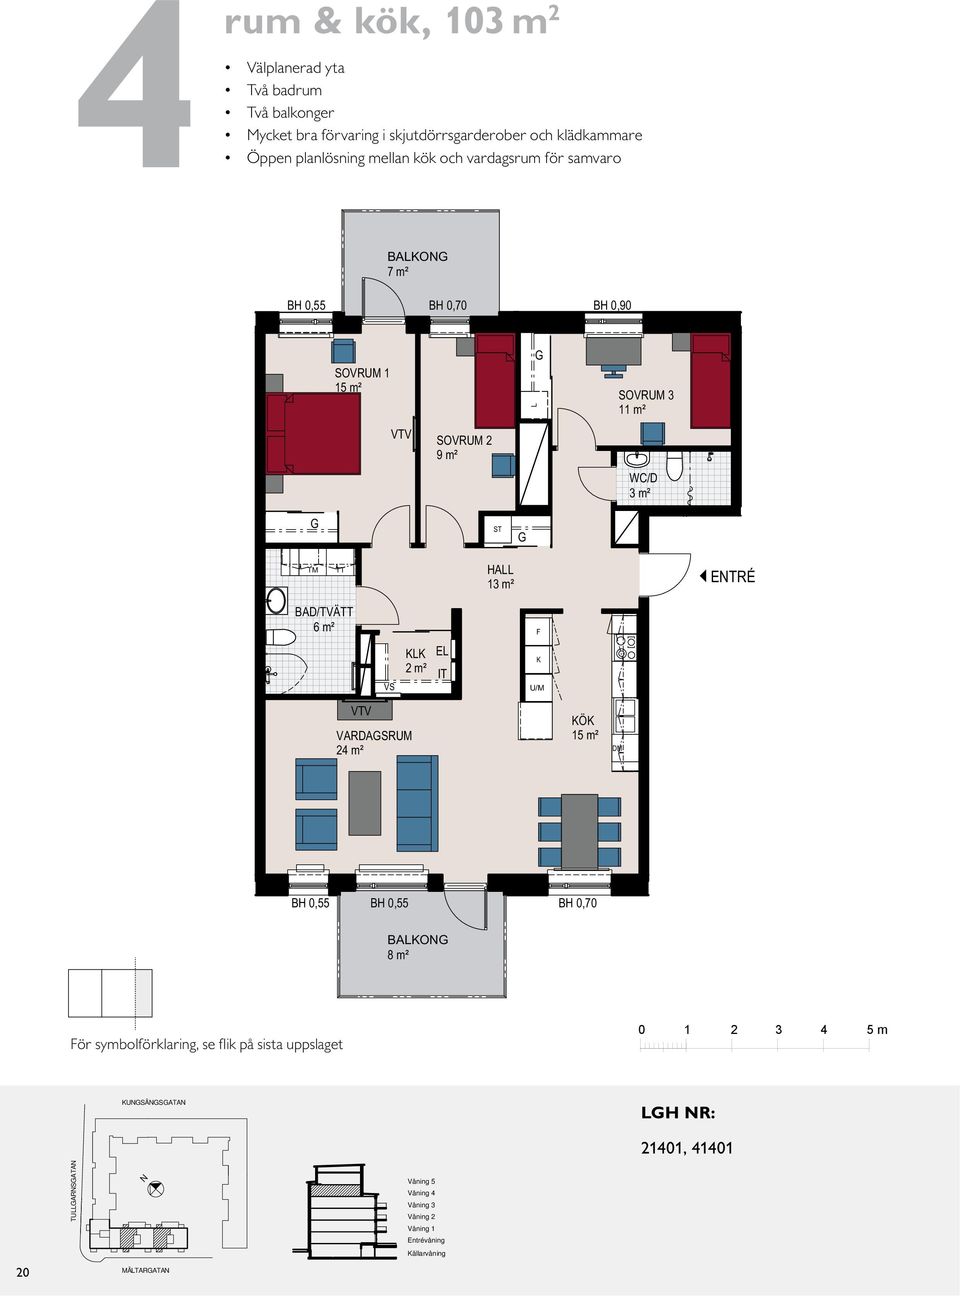 BH 0,90 SOVRUM 3 11 m² 9 m² /D 3 m² 13 m² ETRÉ /TVÄ 6 m² VS 2 m² E IT VARDASRUM 24 m² BH 8 m² SAA